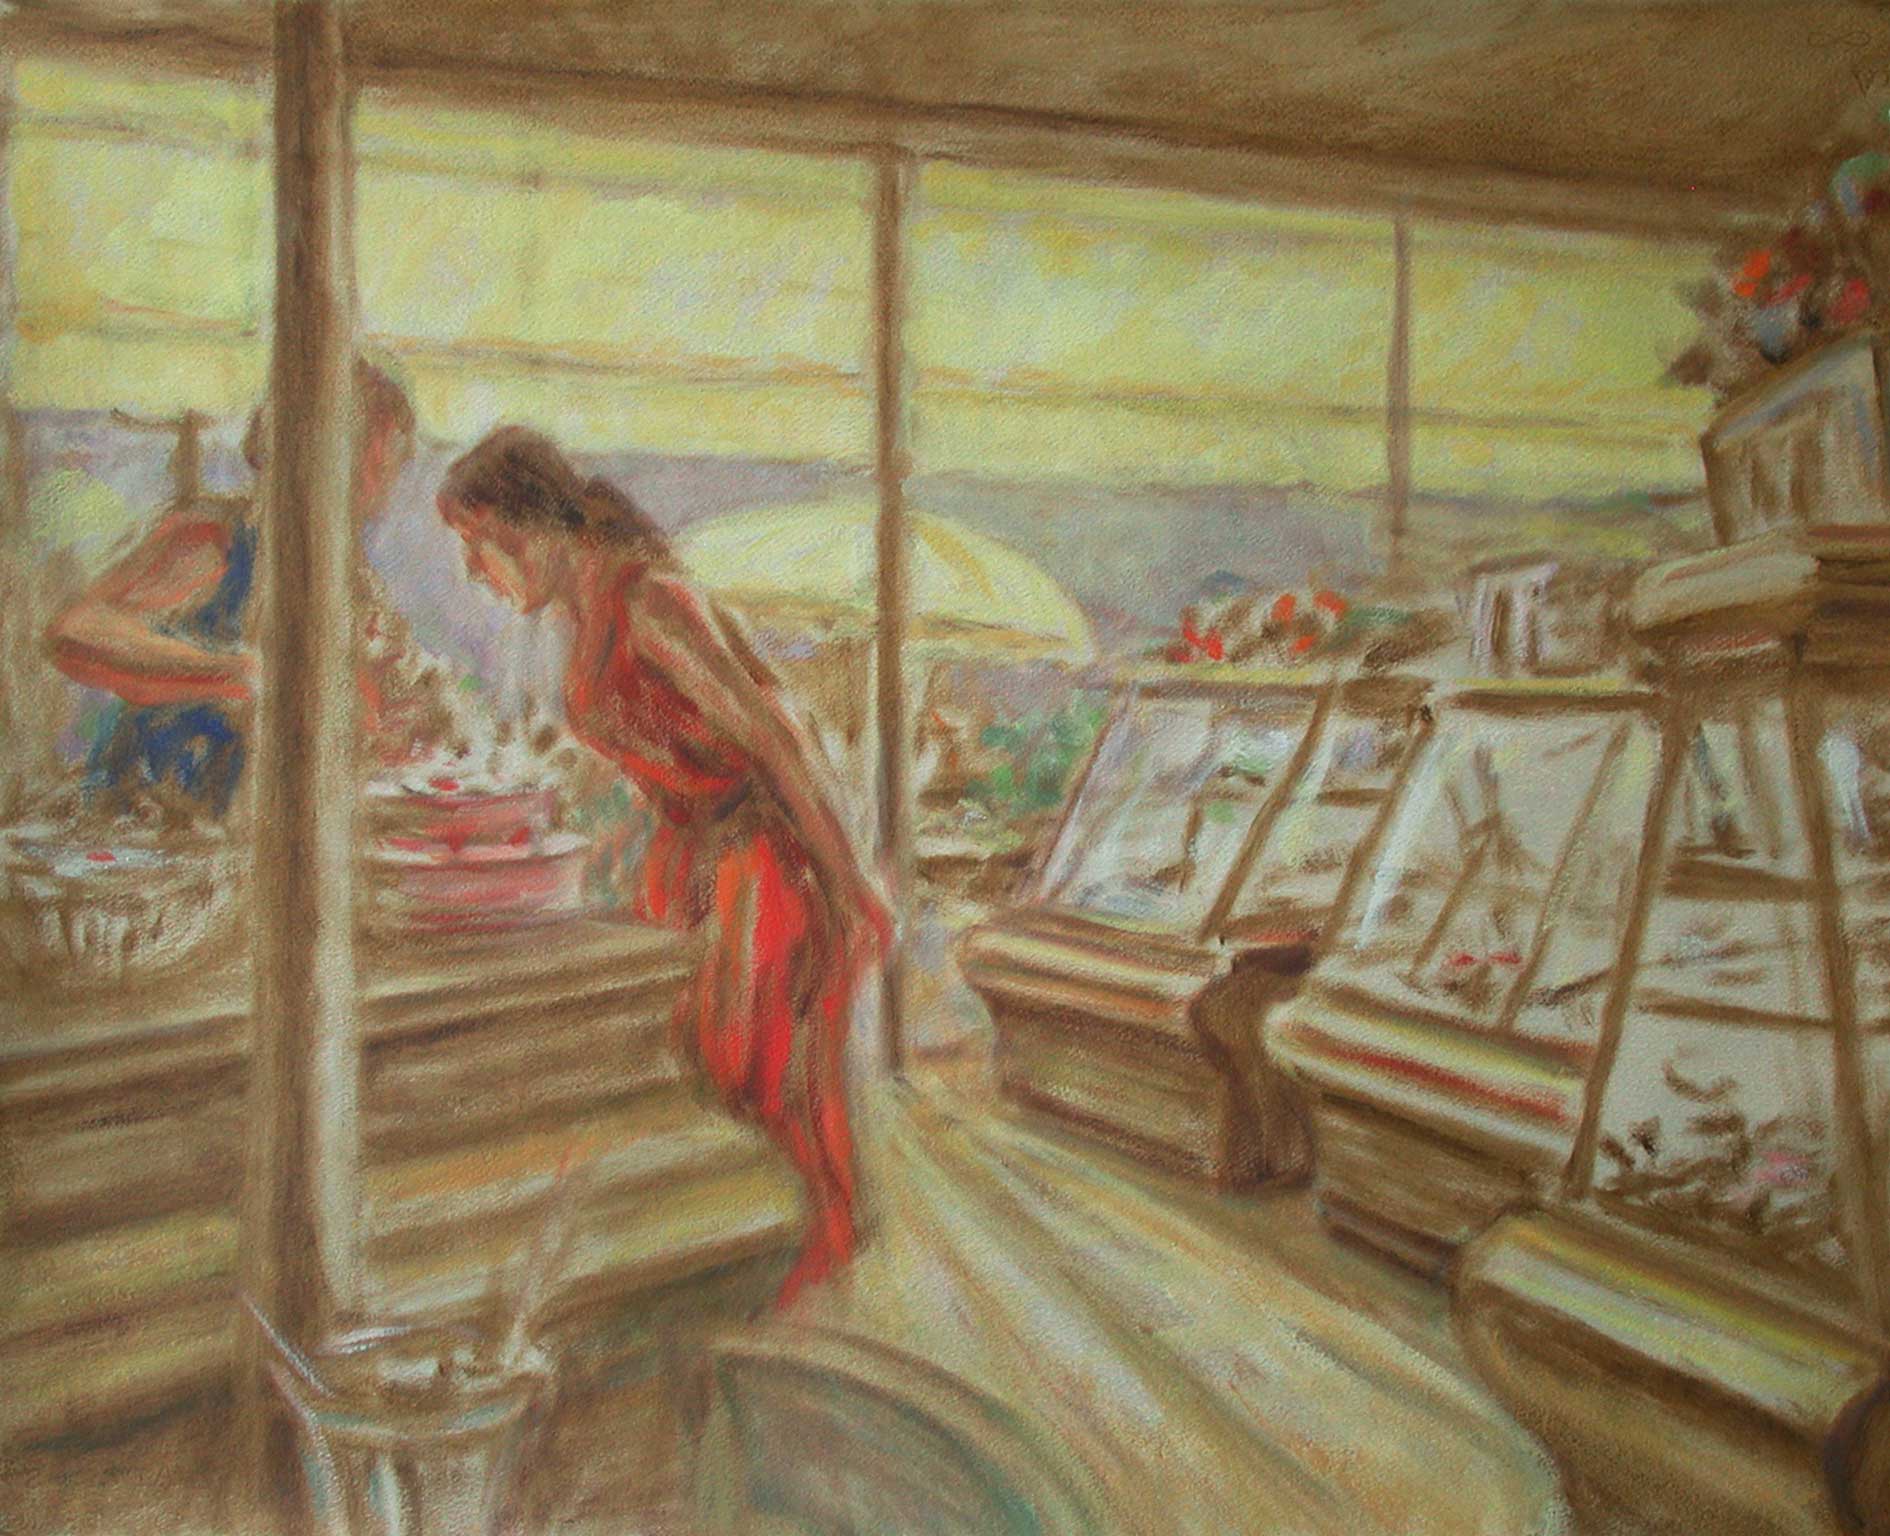 'The pastry shop, quick oil sketch 70 x 55 cm